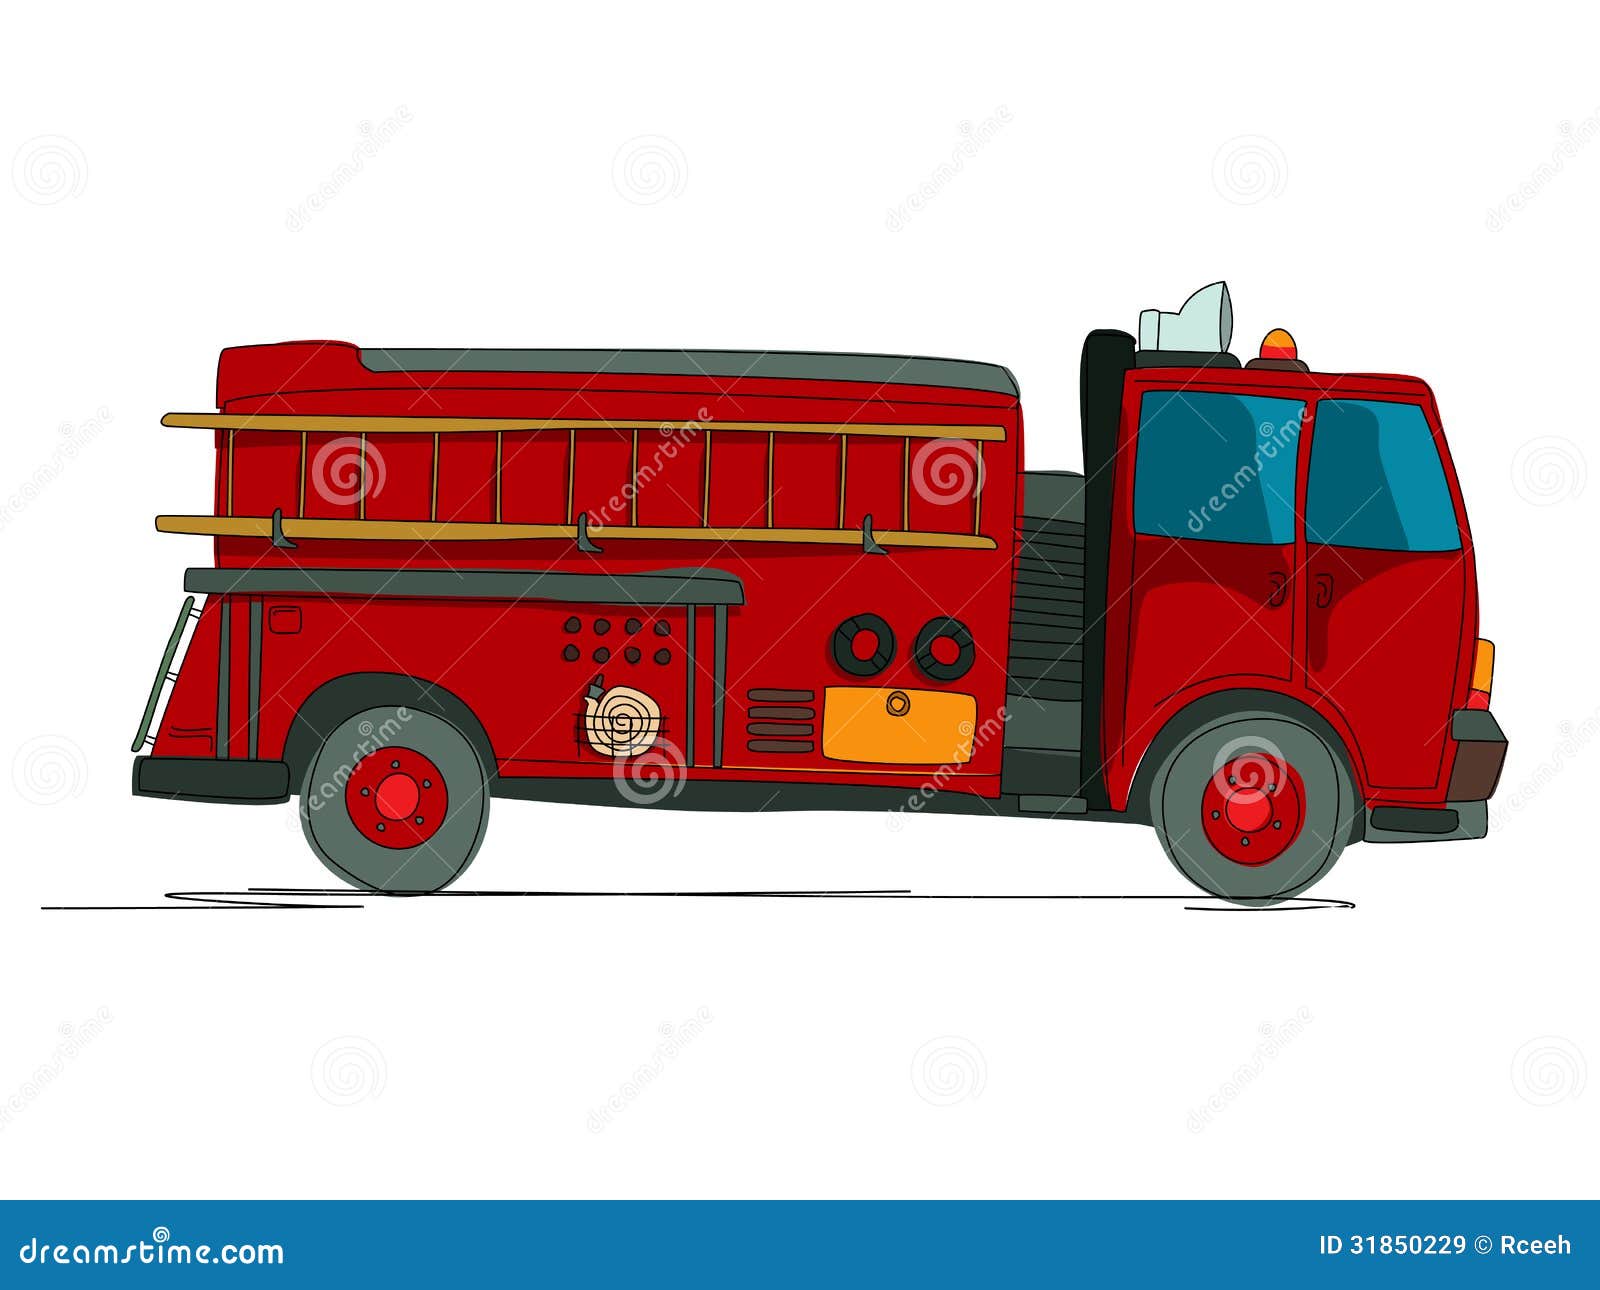 Fire truck cartoon sketch over white background.